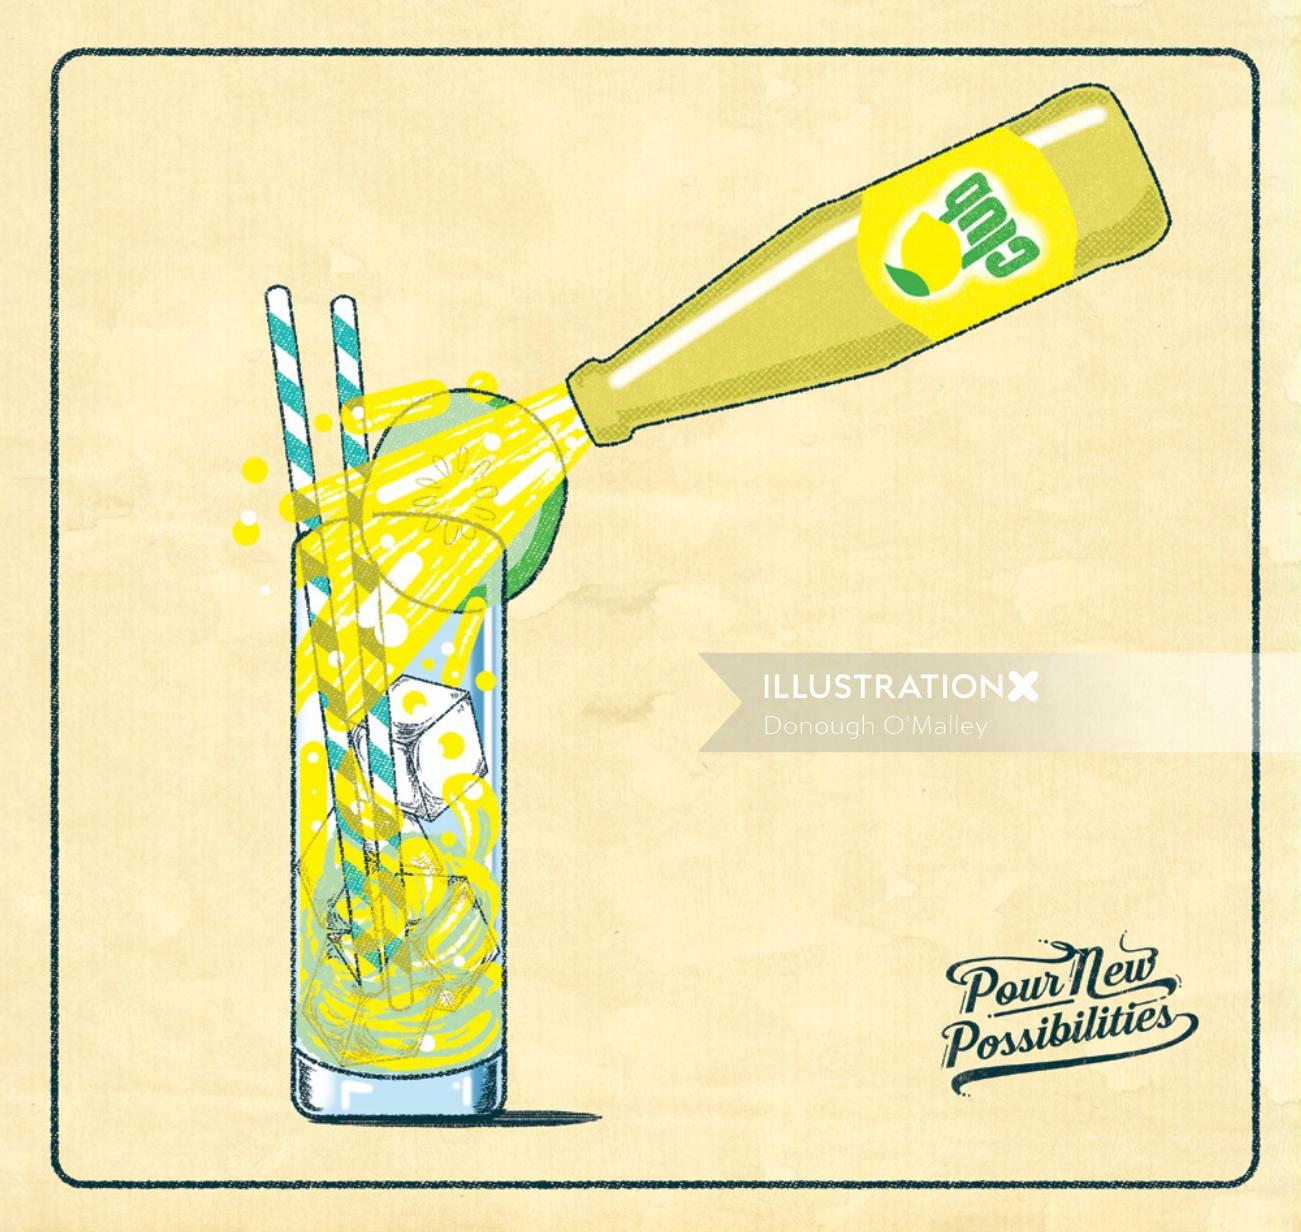 Promotional illustration for Britvic soft drinks.